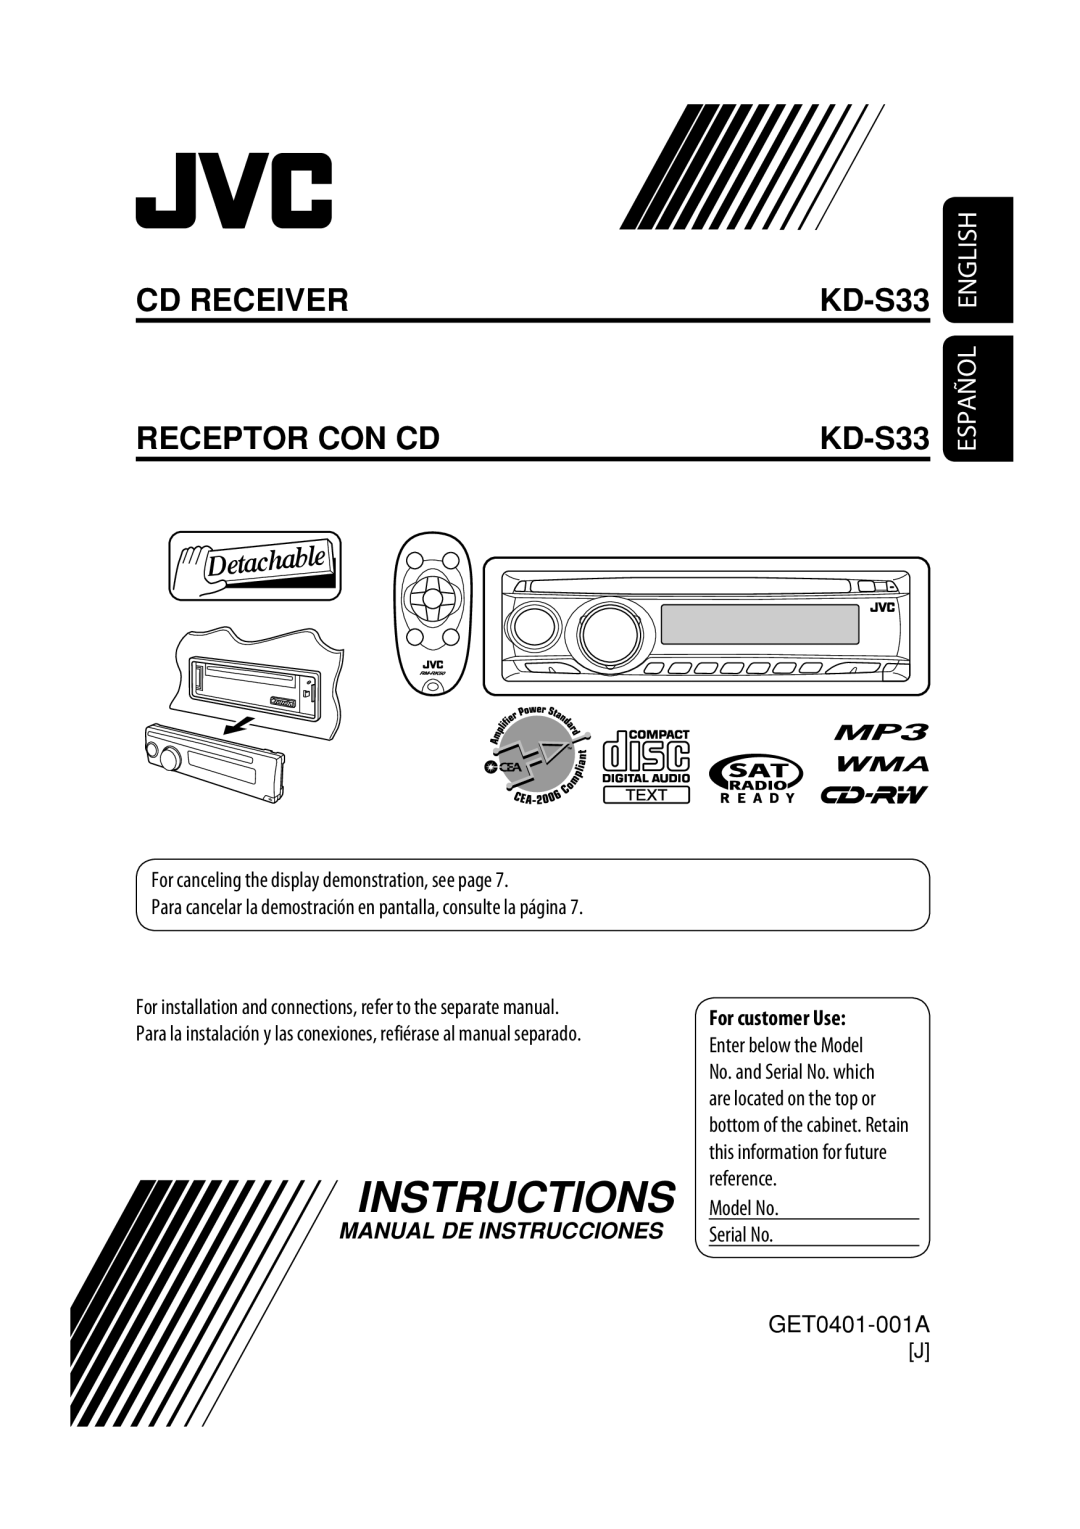 JVC KD-S33 manual Español English, For customer Use, GET0401-001A, Instructions, Cd Receiver Receptor Con Cd 